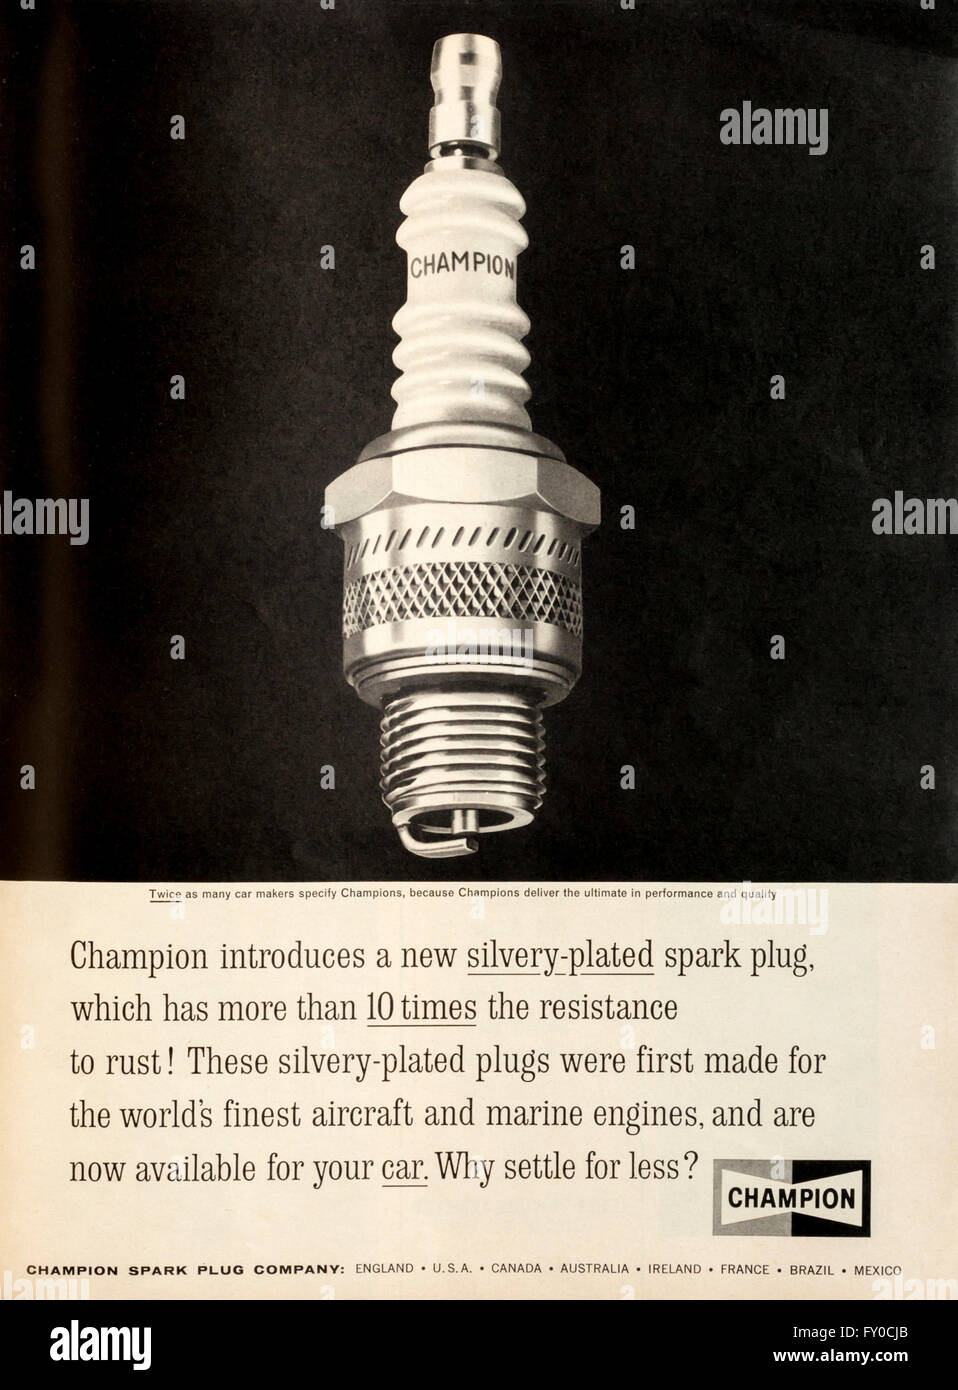 1960s magazine advertisement advertising Champion spark plugs. Stock Photo